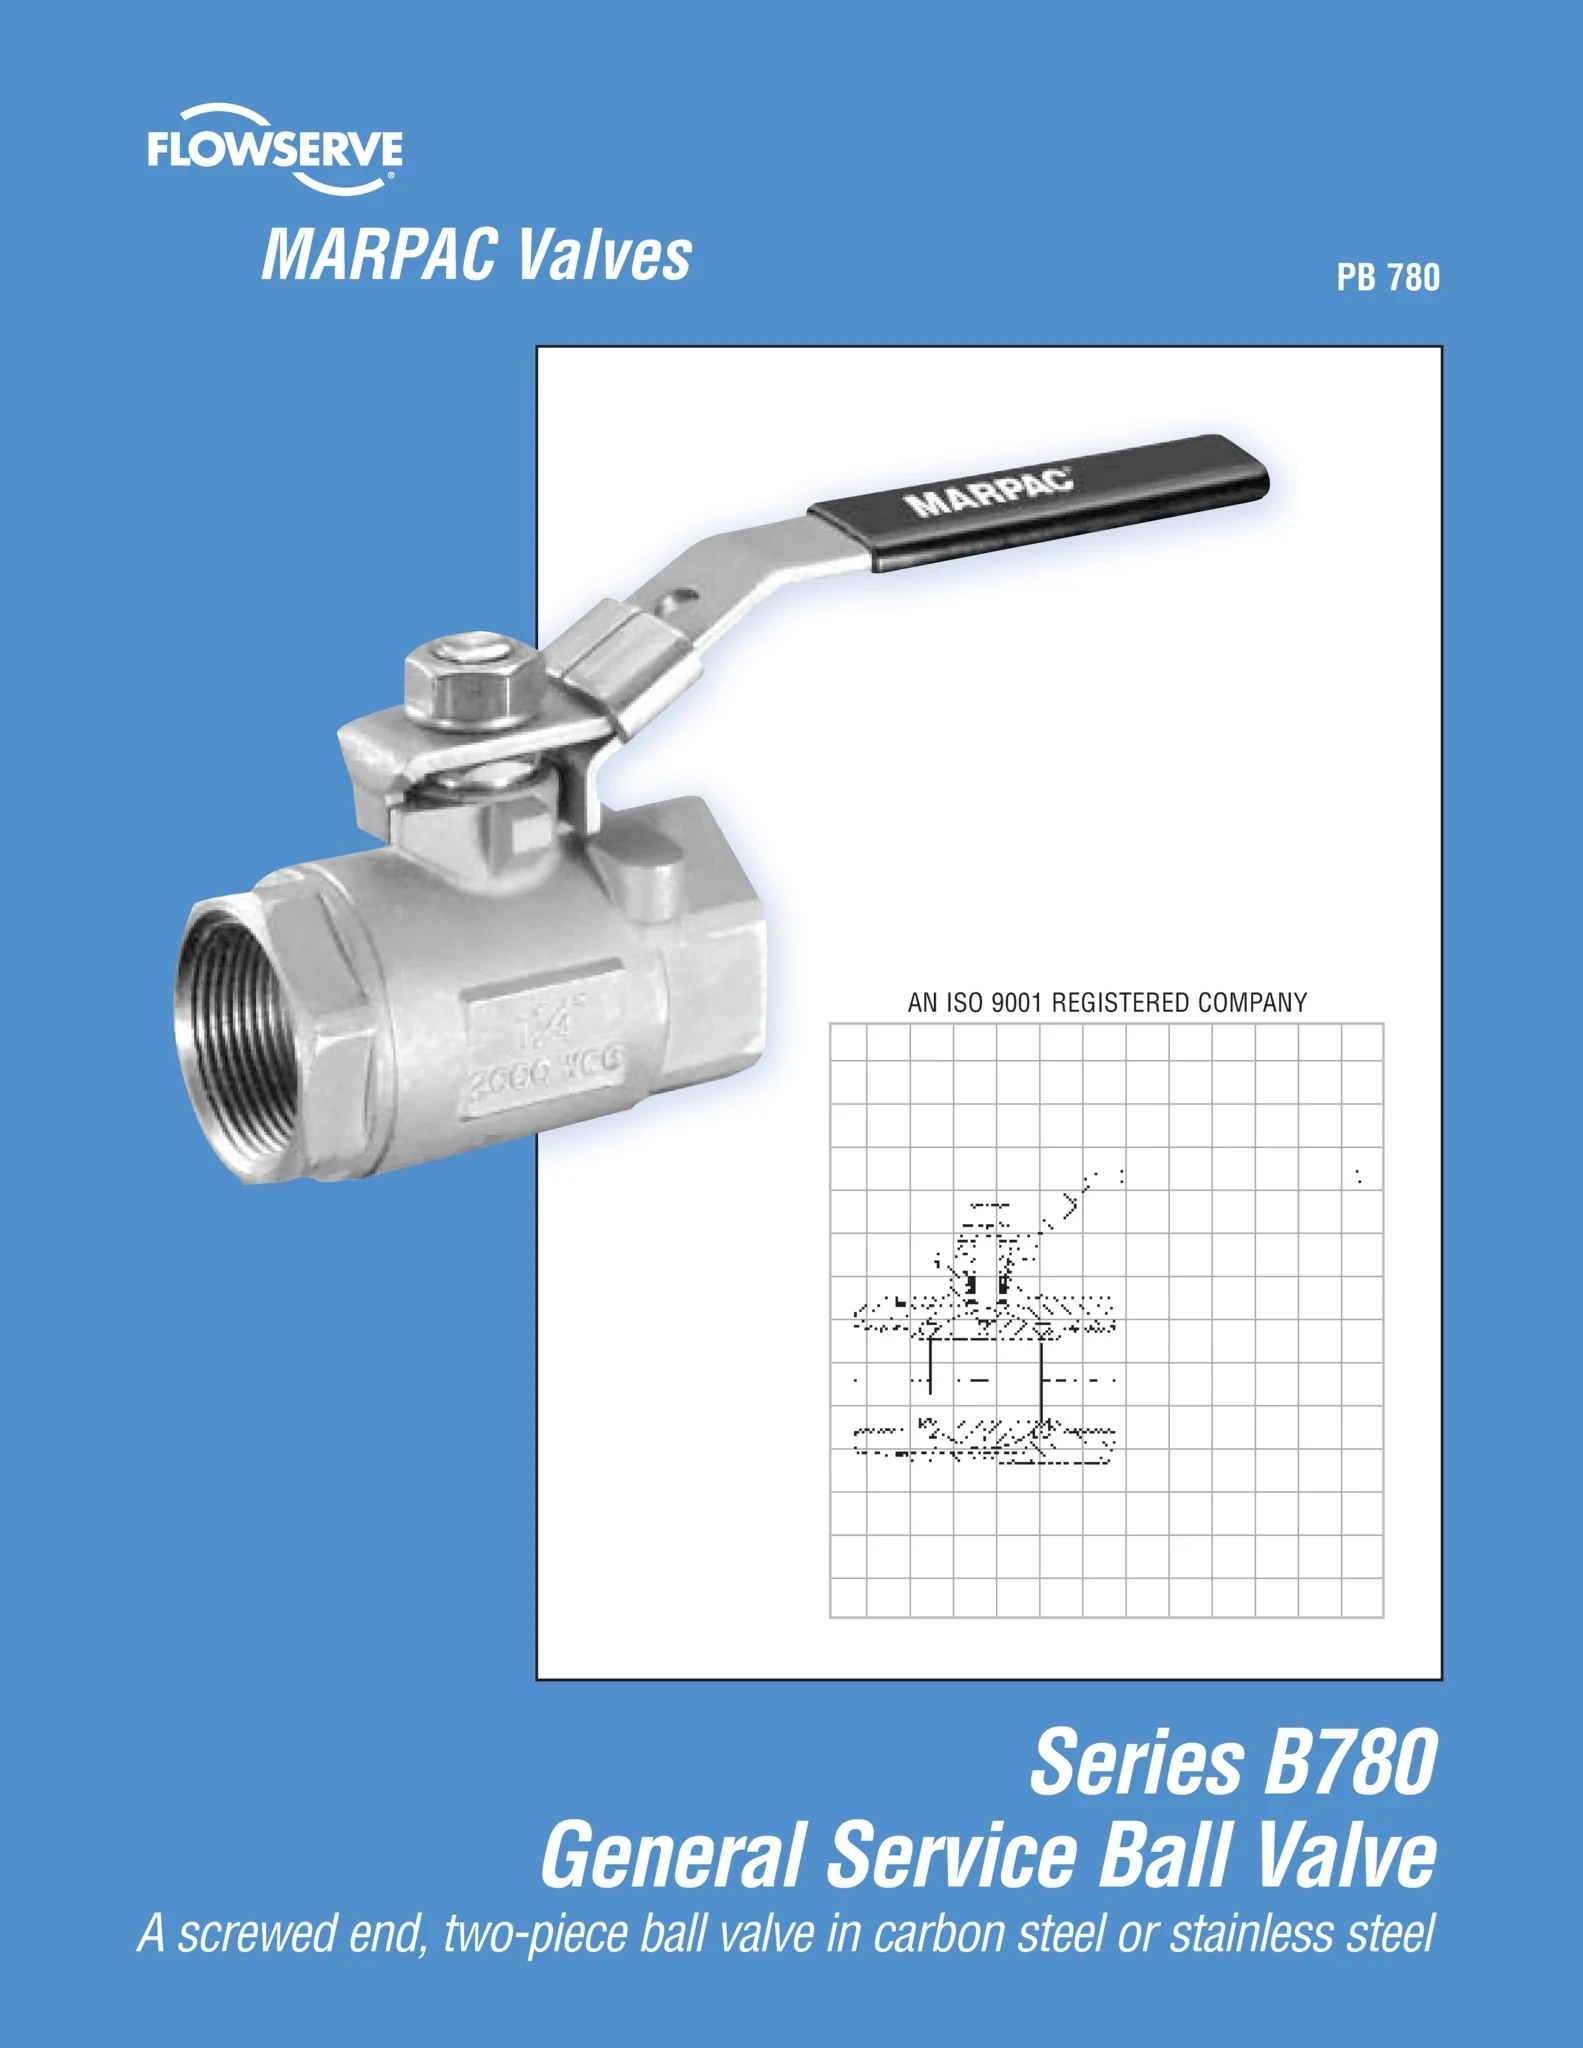 McCANNA/MARPAC通用螺纹端球阀手册